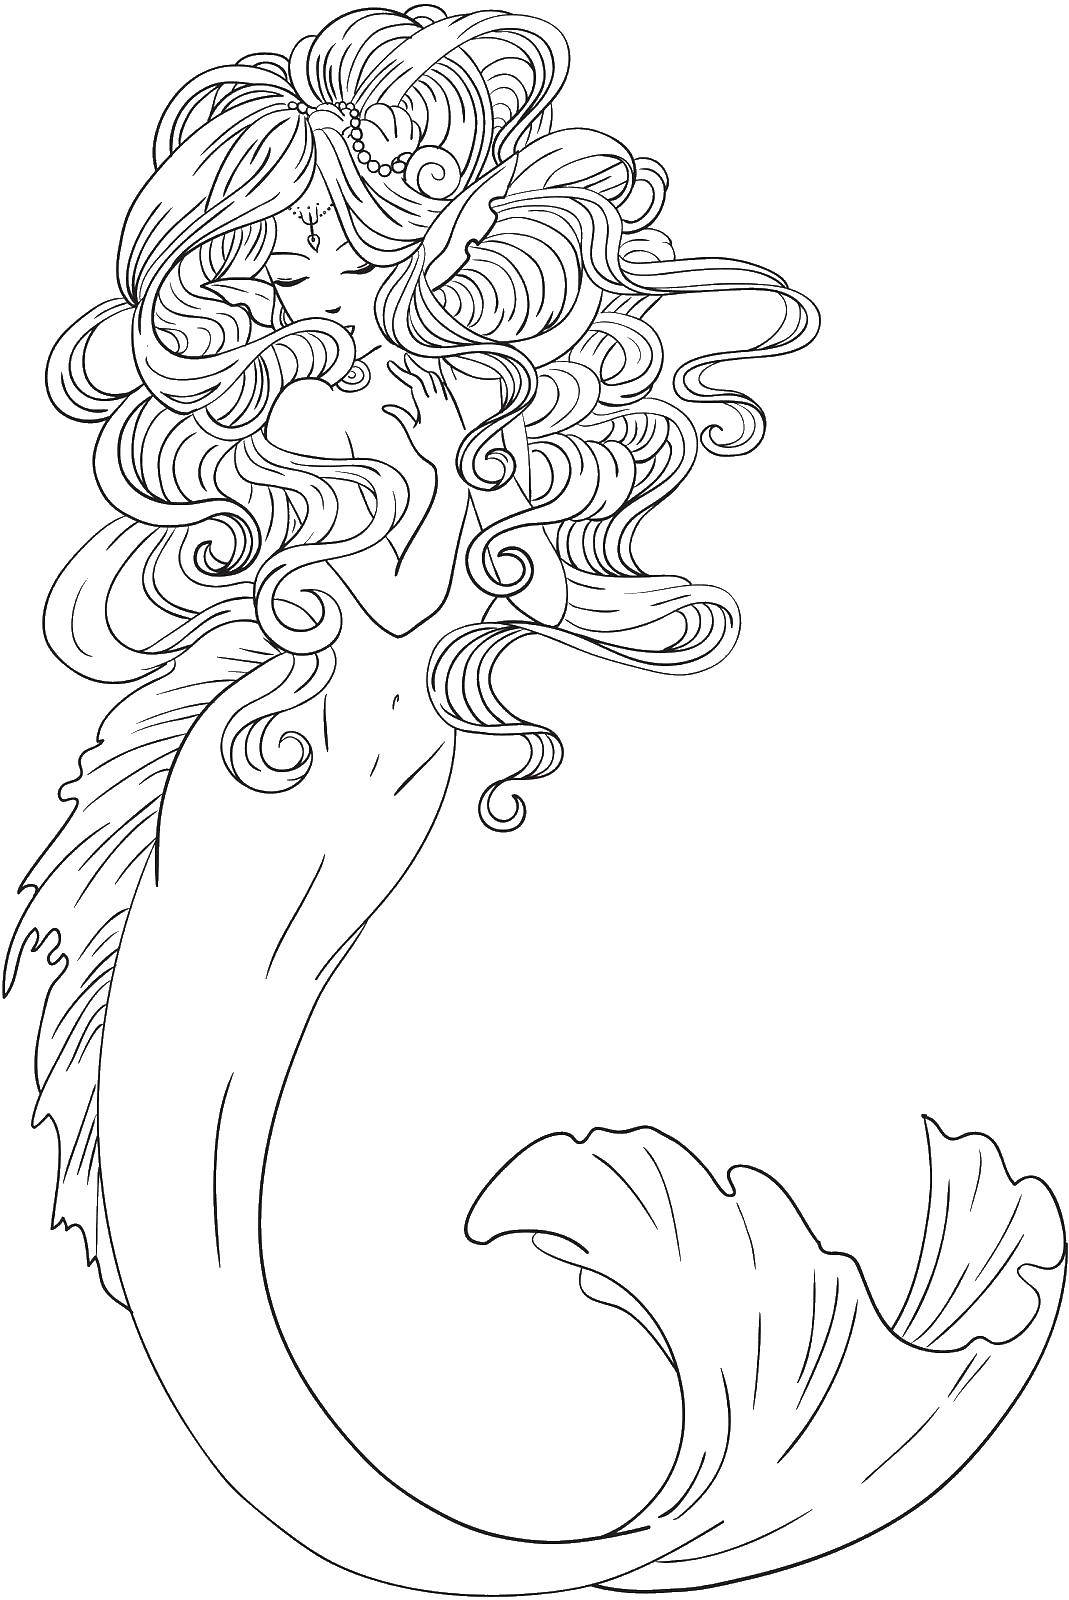 Название: Раскраска Русалка с шикарными волосами. Категория: Фэнтези. Теги: фэнтези, девушка, русалка, волосы.